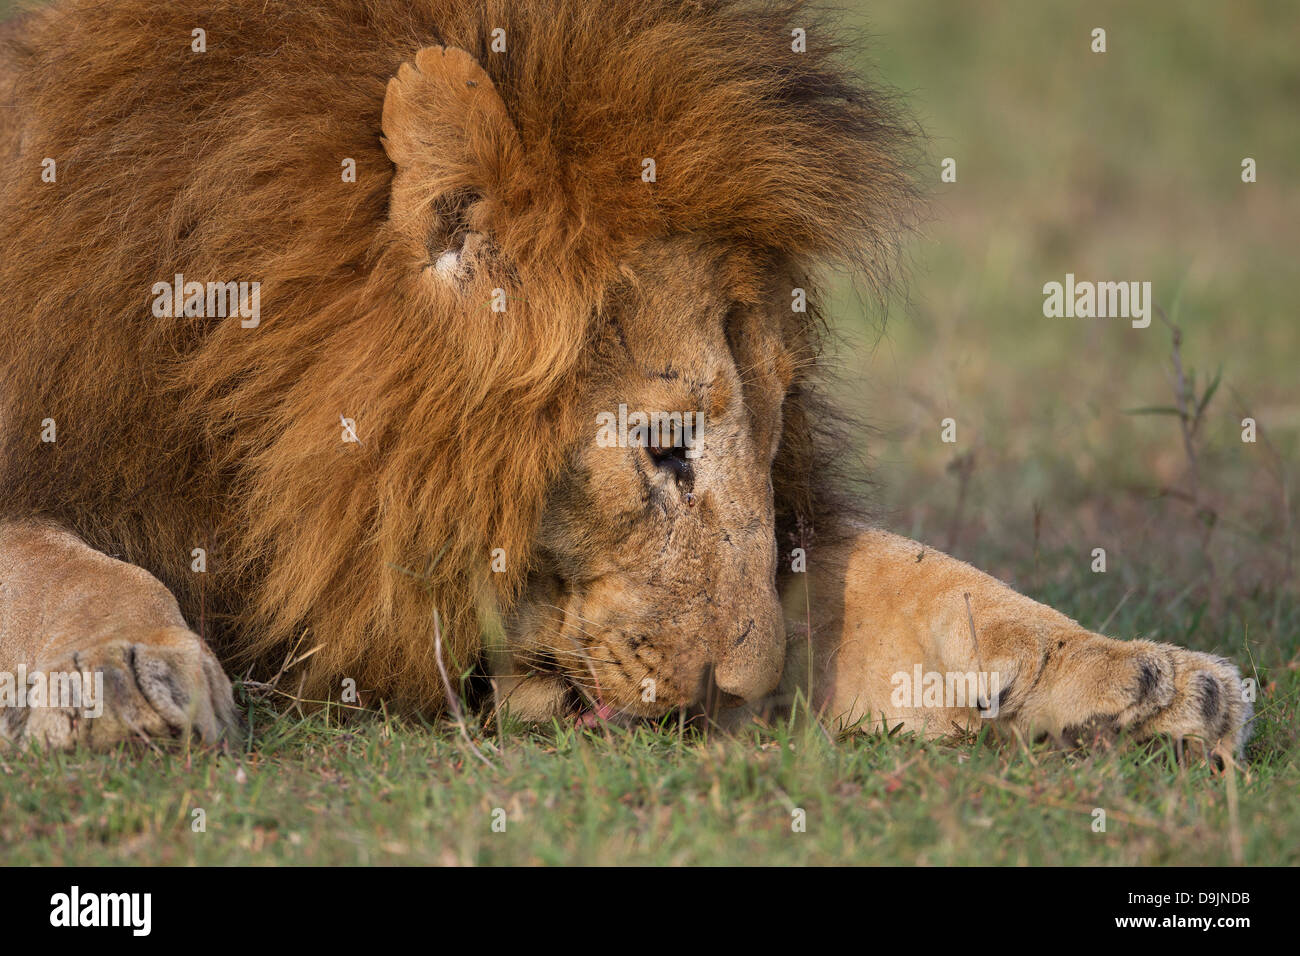 Lion close-up portrait, Masai Mara, Kenya Stock Photo